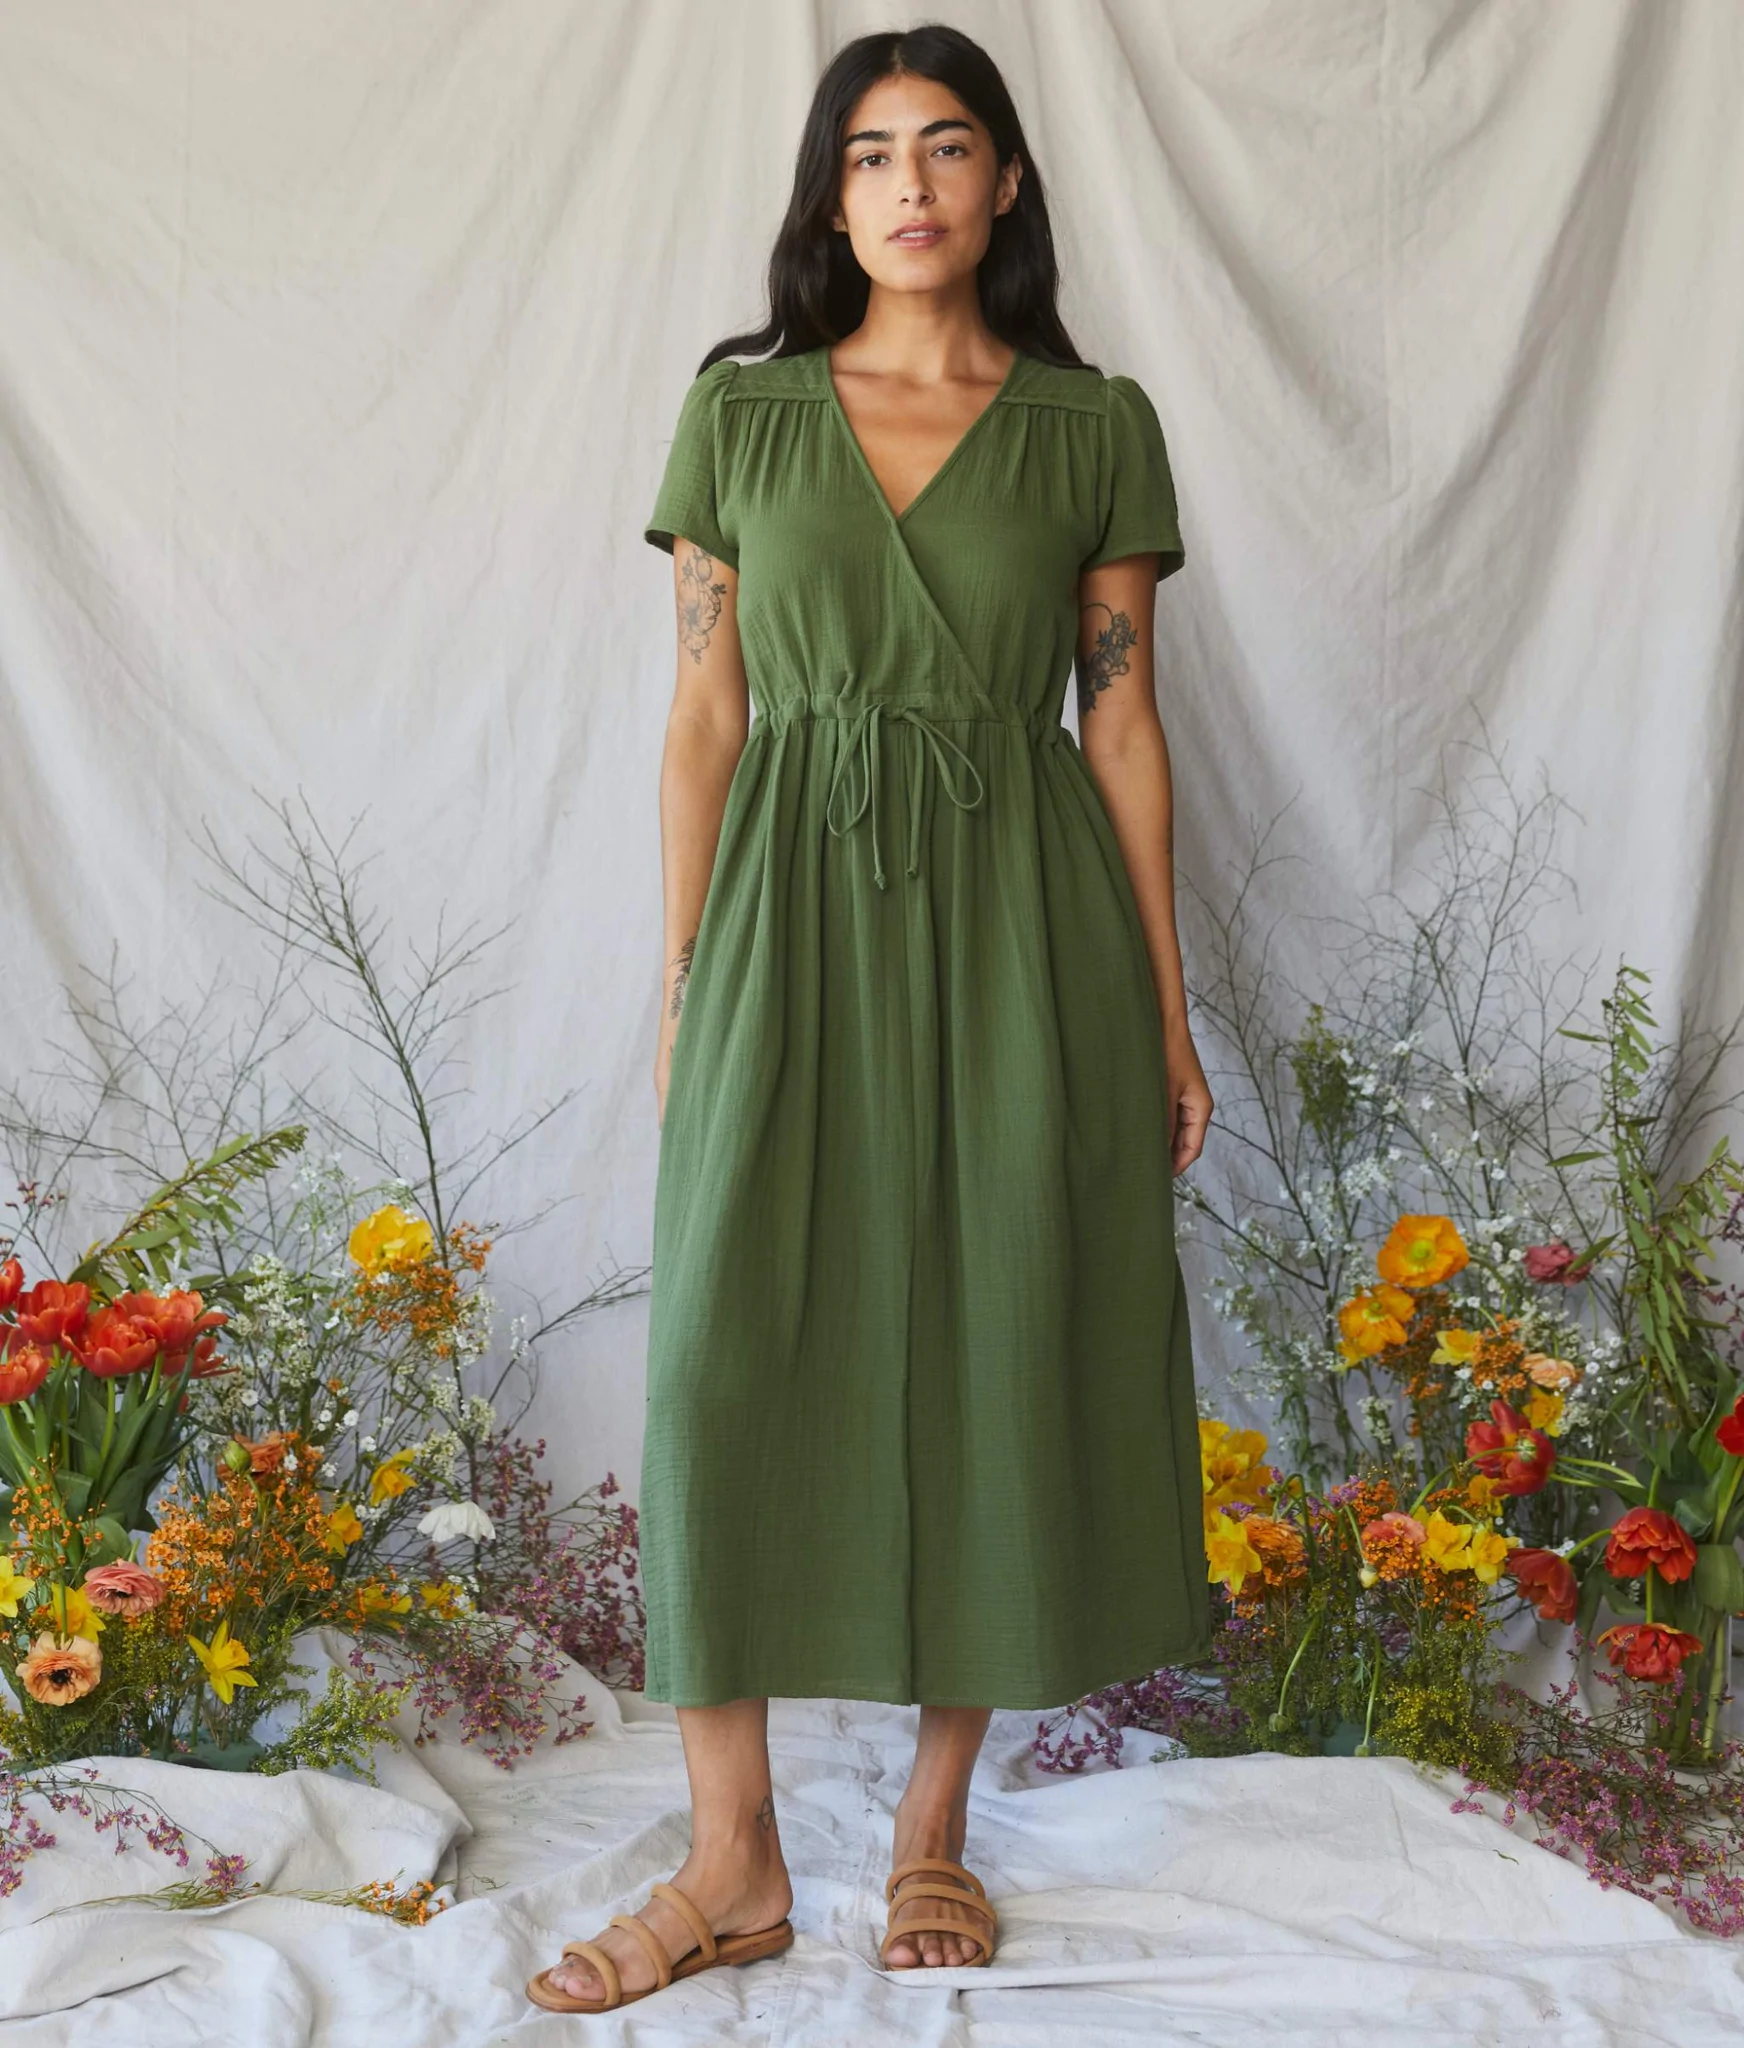 organic cotton maternity dress from christy dawn